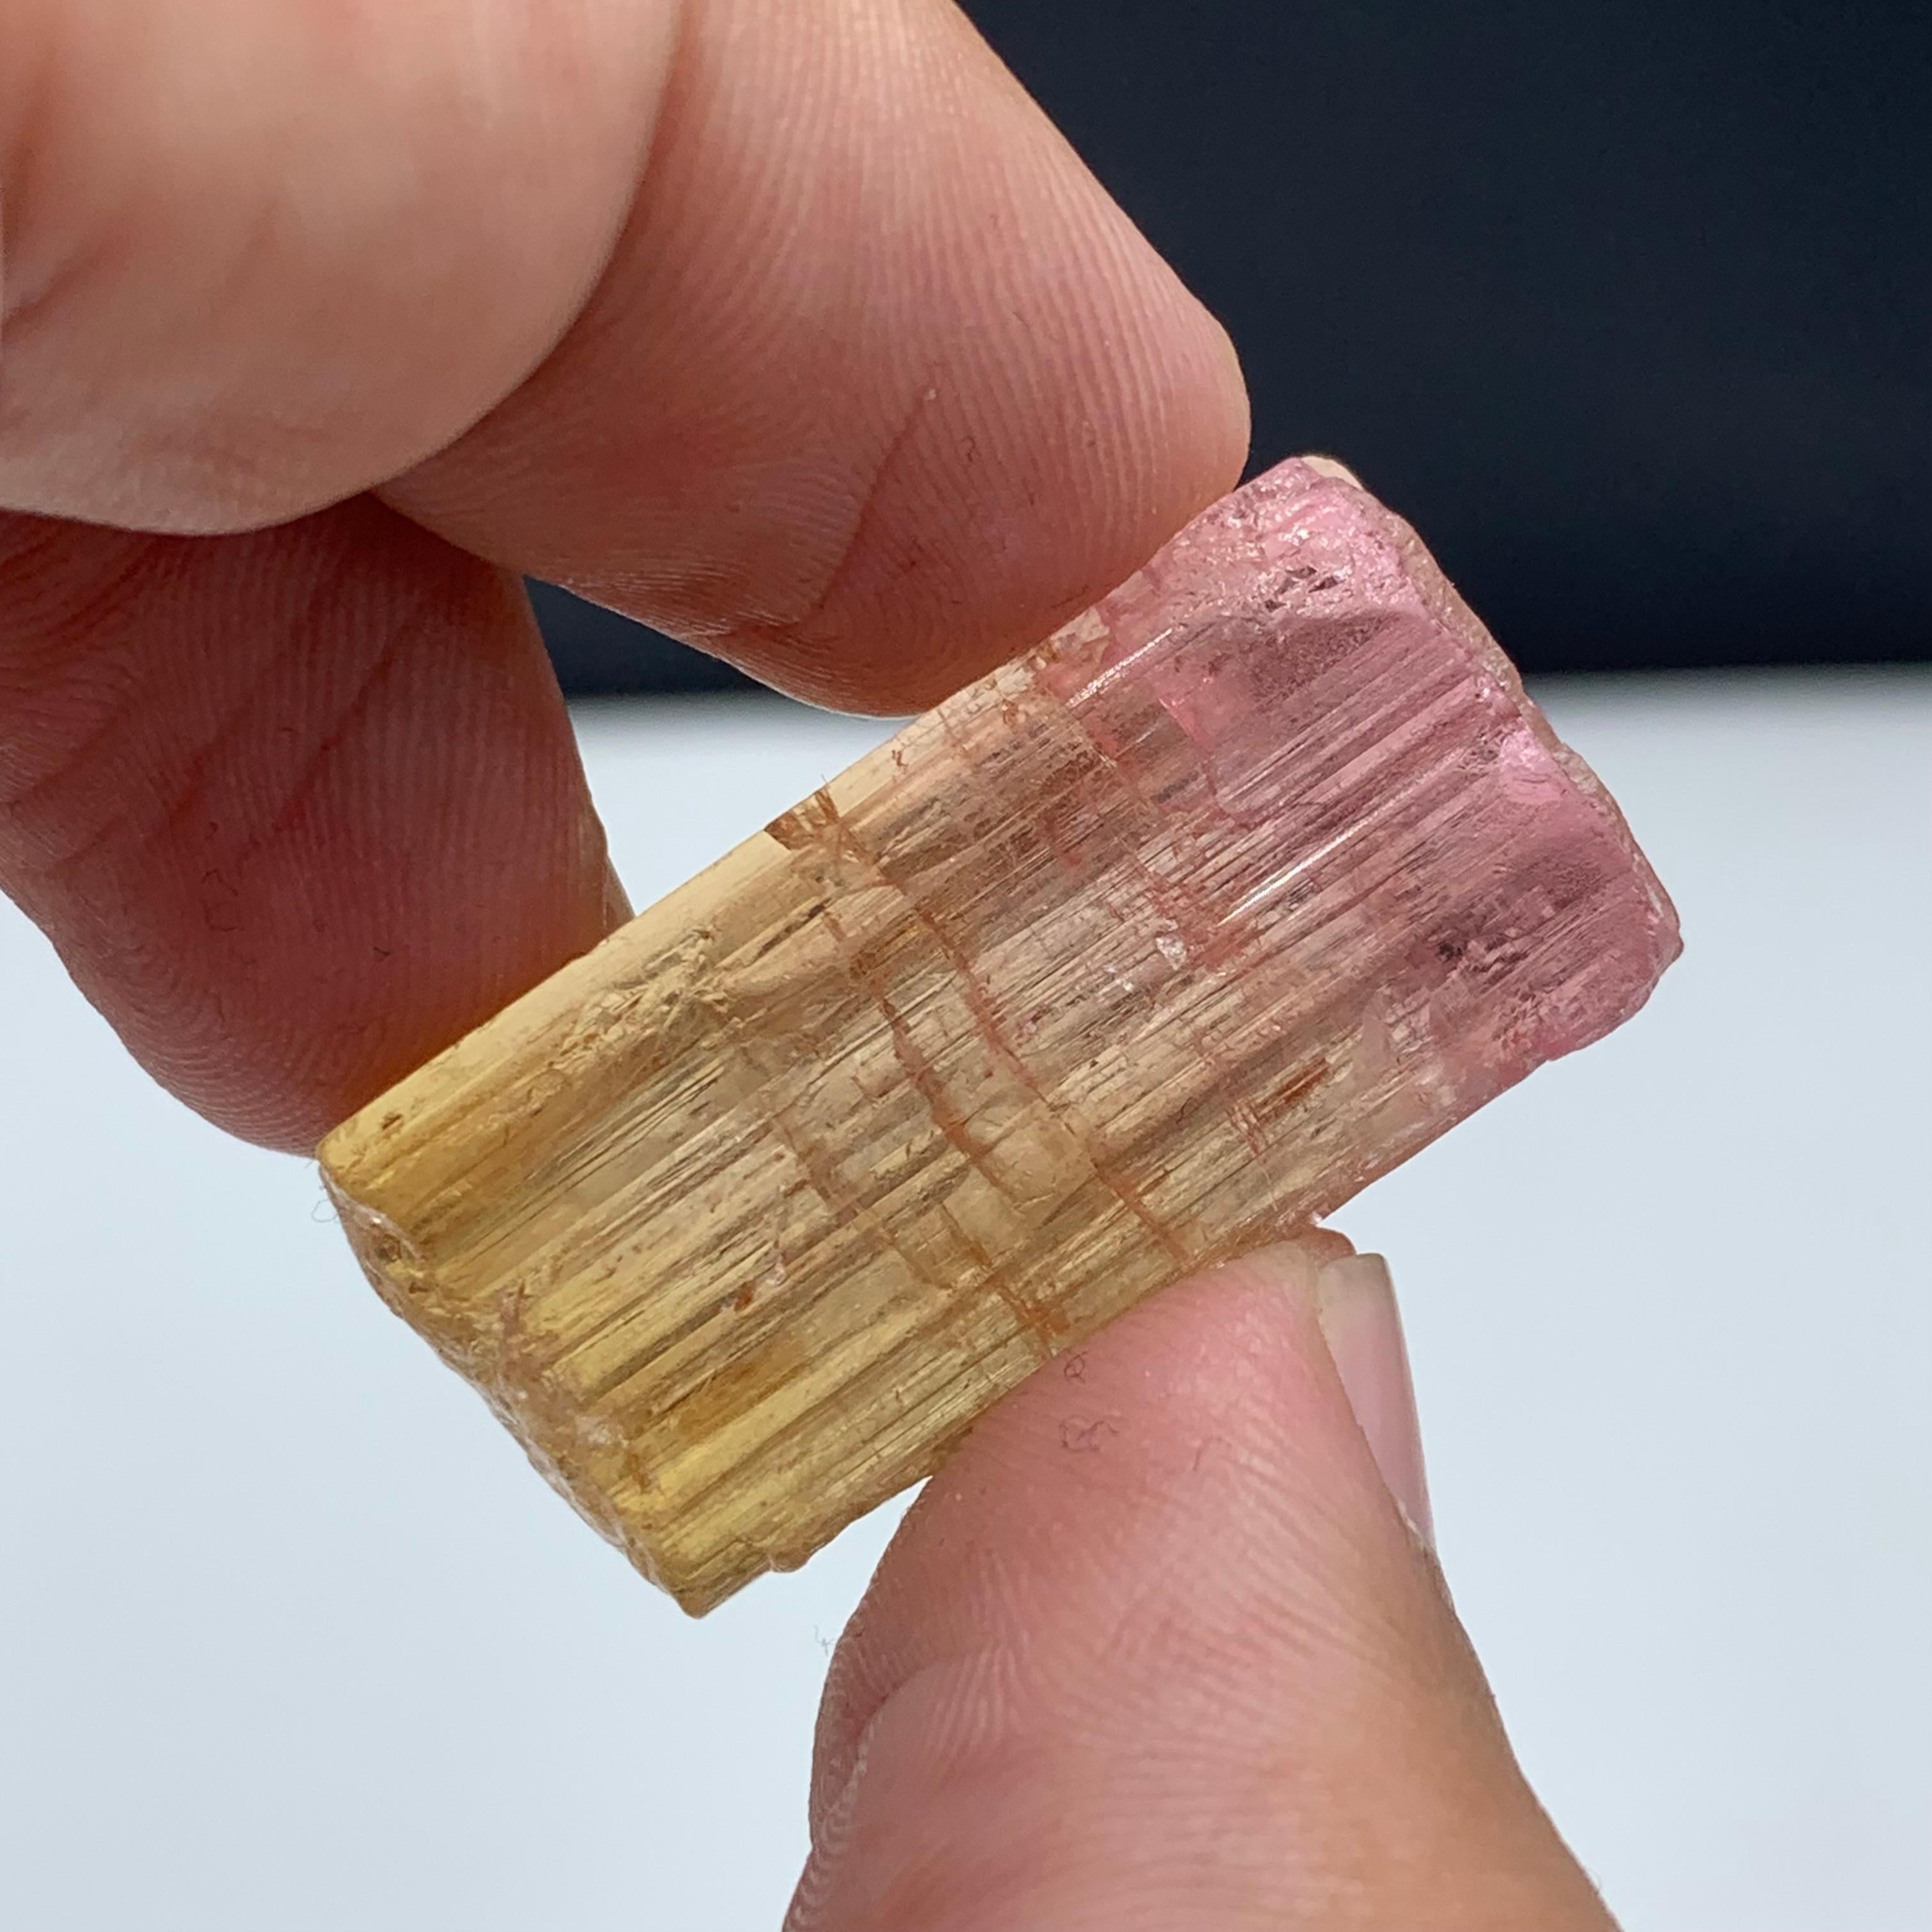 Rock Crystal 48 Carat Amazing Bi Color Tourmaline Crystal From Paprook Mine, Afghanistan For Sale